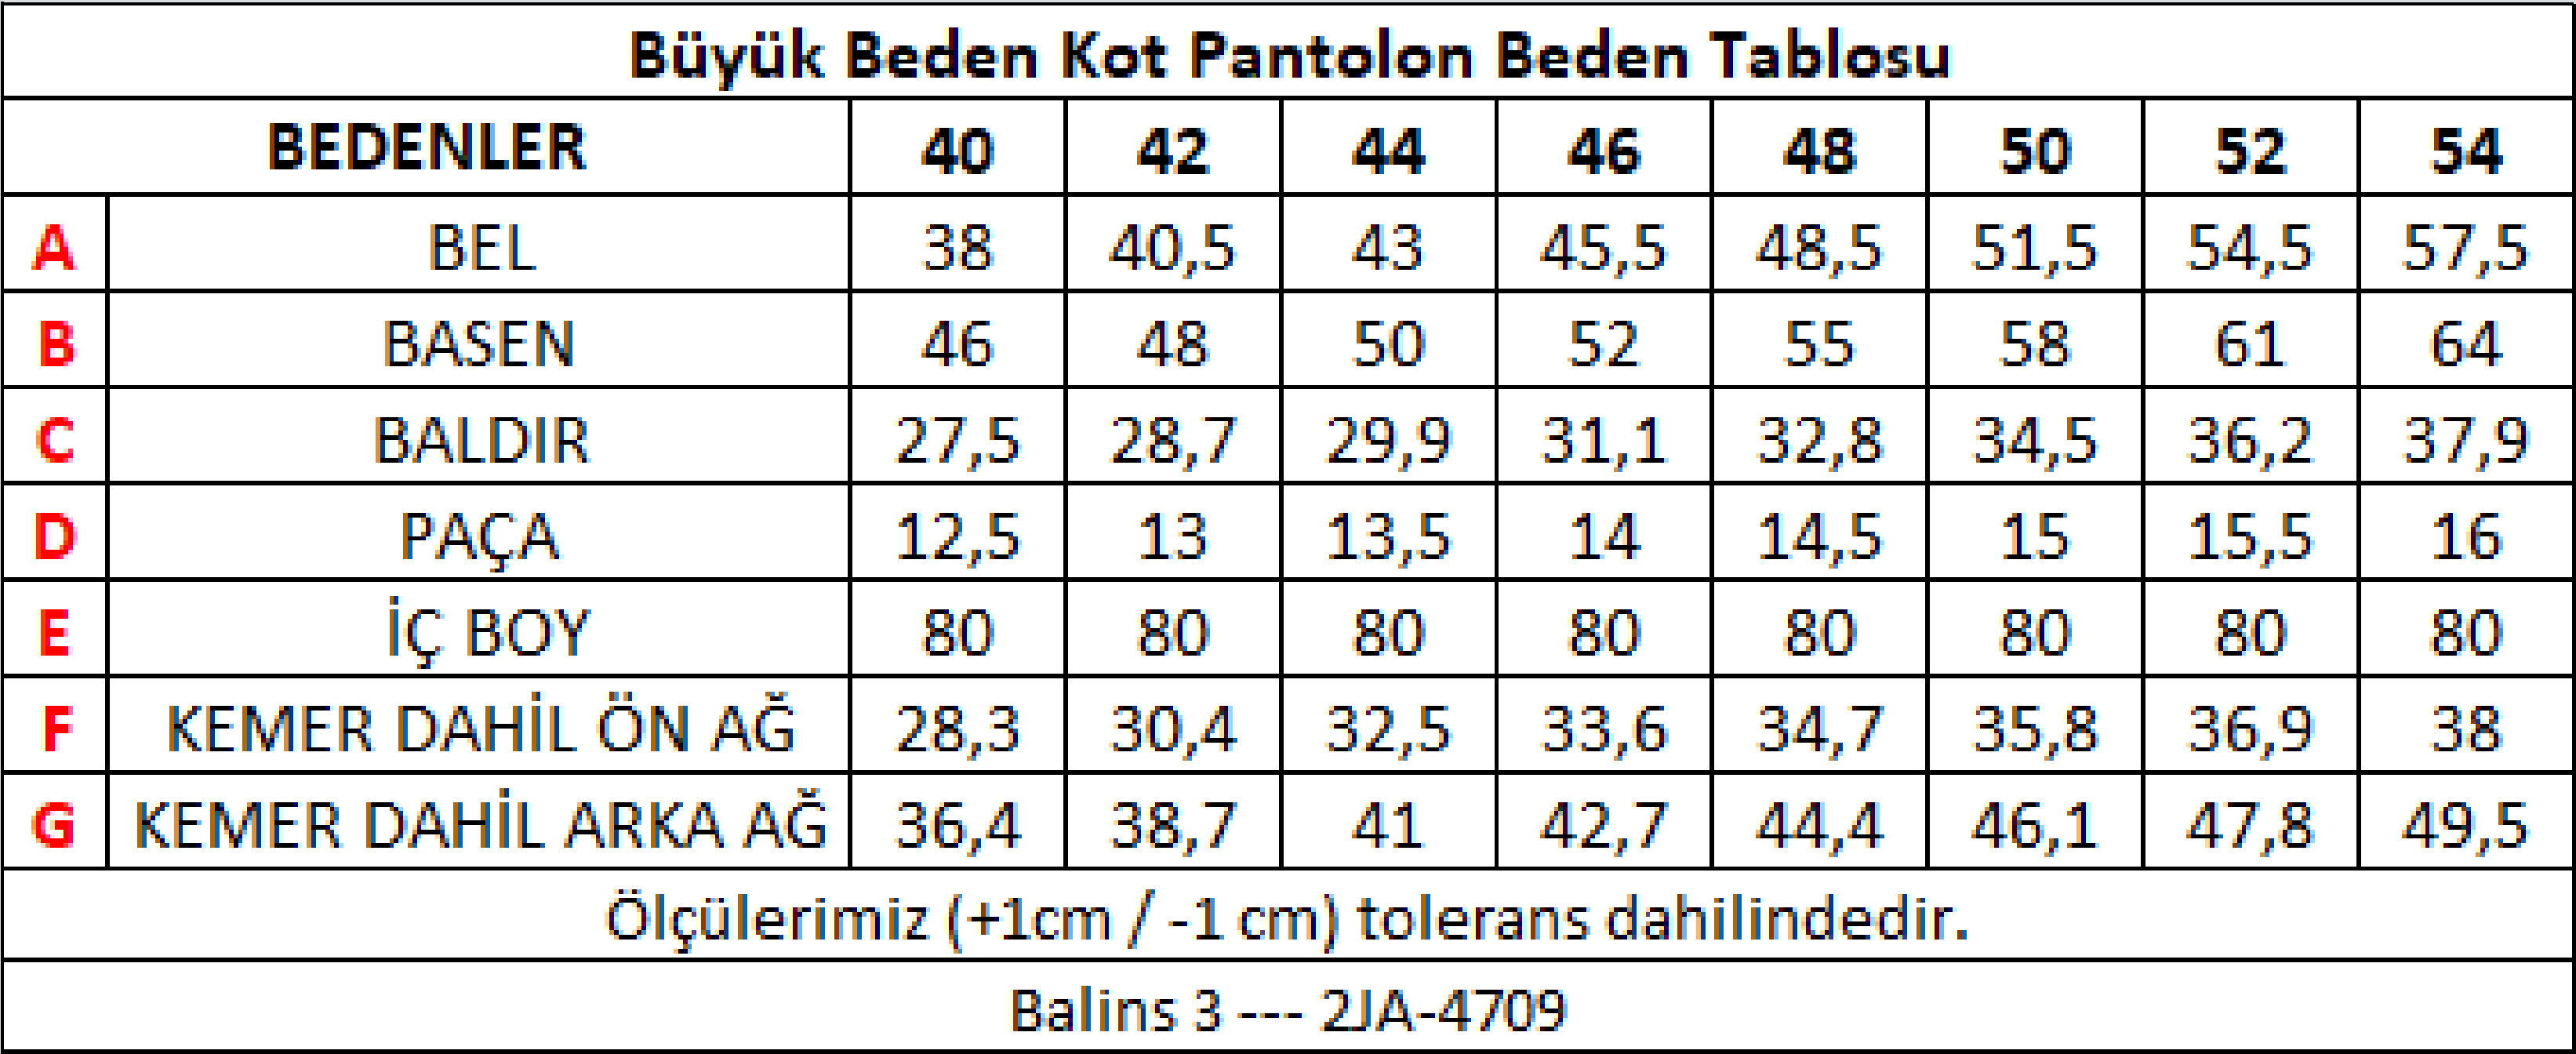 balins-3.png (50 KB)